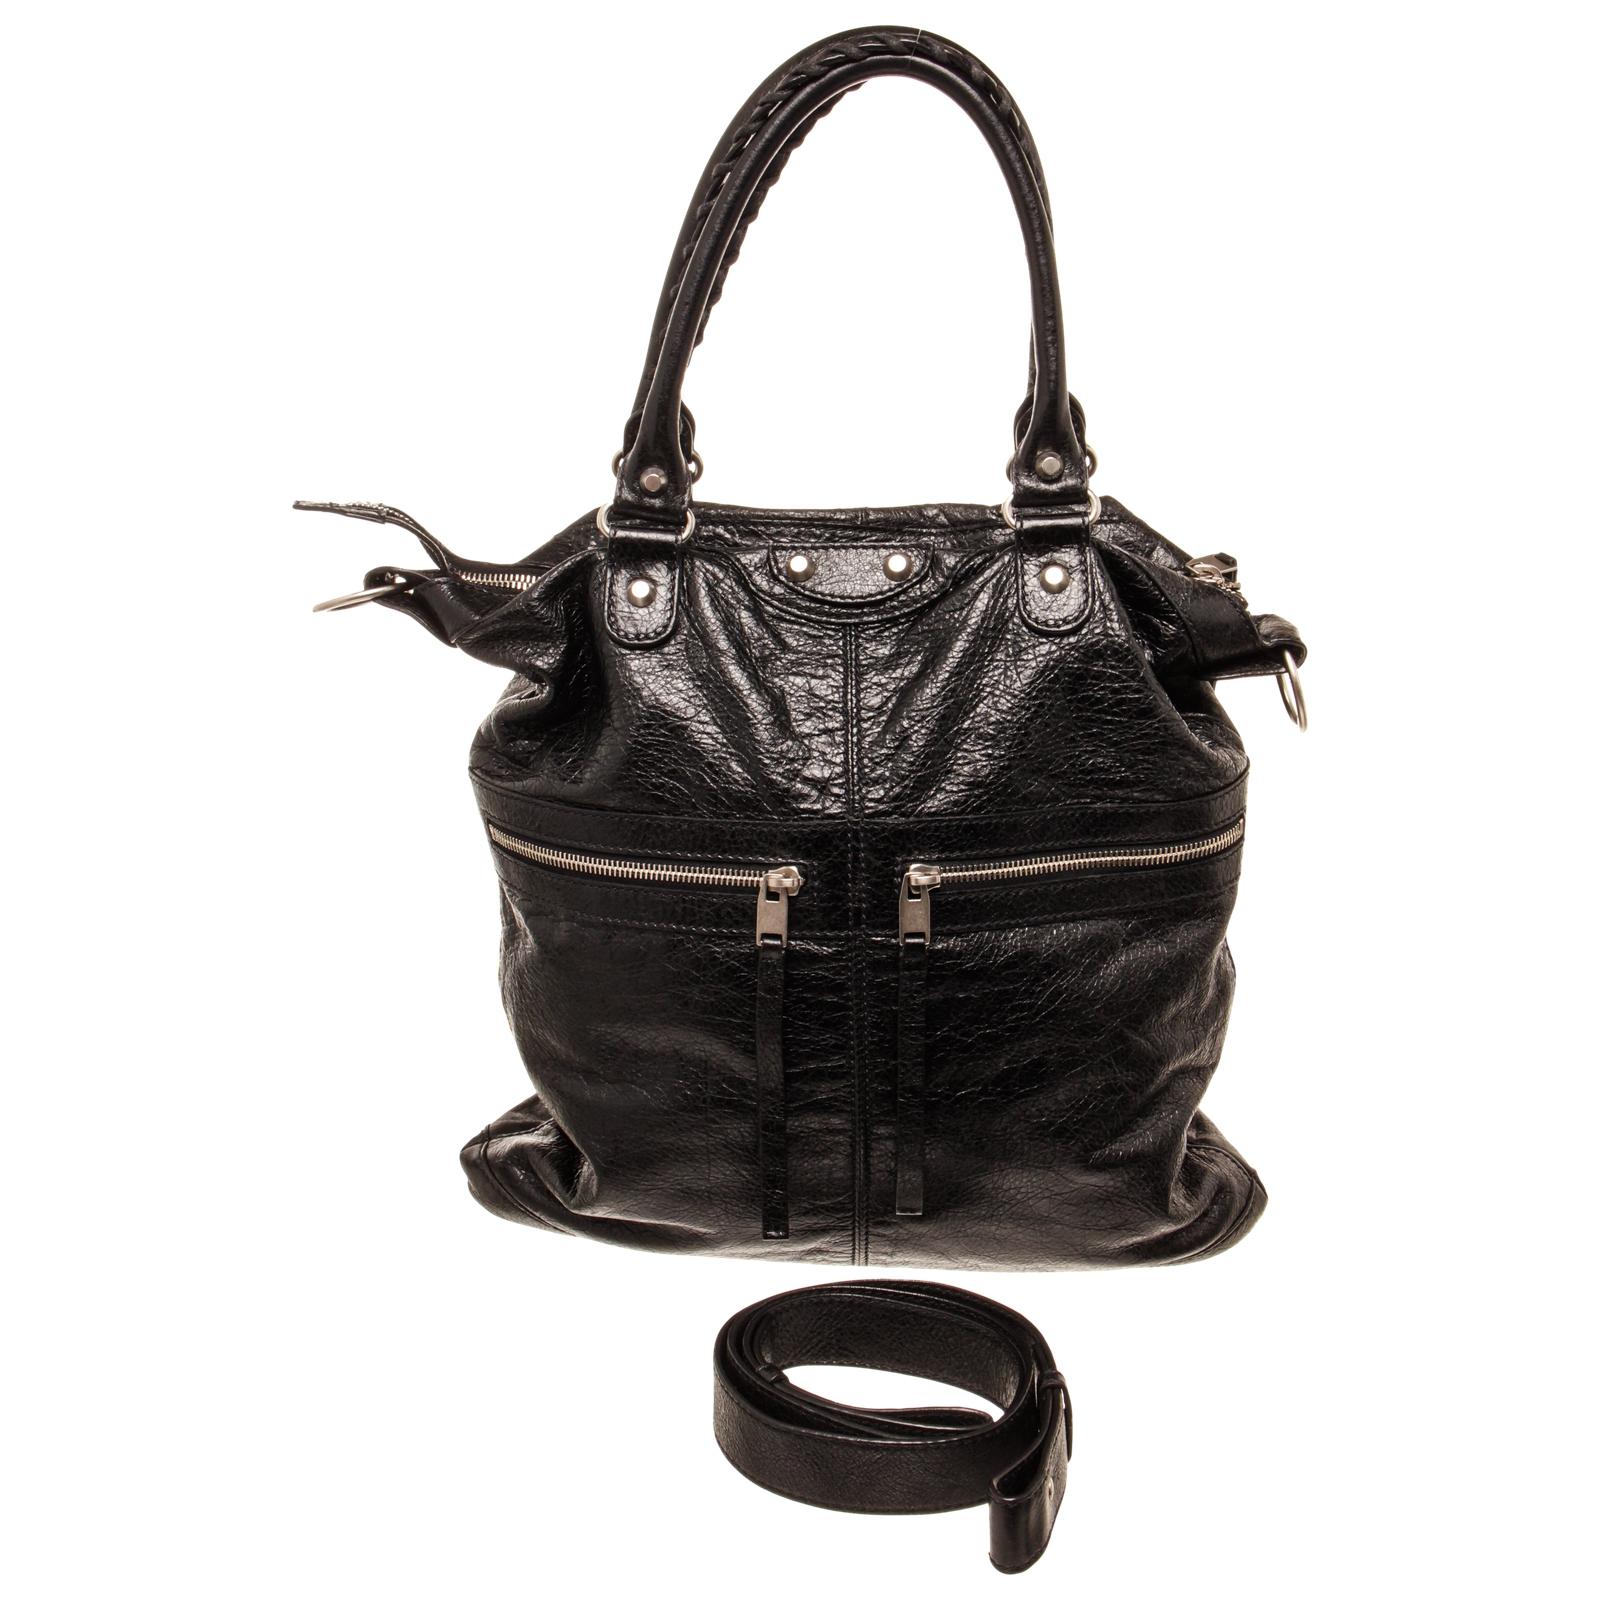 Balenciaga Black Leather Square Zip Shoulder Bag with silver-toneÂ hardware, exterior zip pocket, interiorÂ zipÂ pockets, dual top handle andÂ zipperÂ closure.

44818MSC